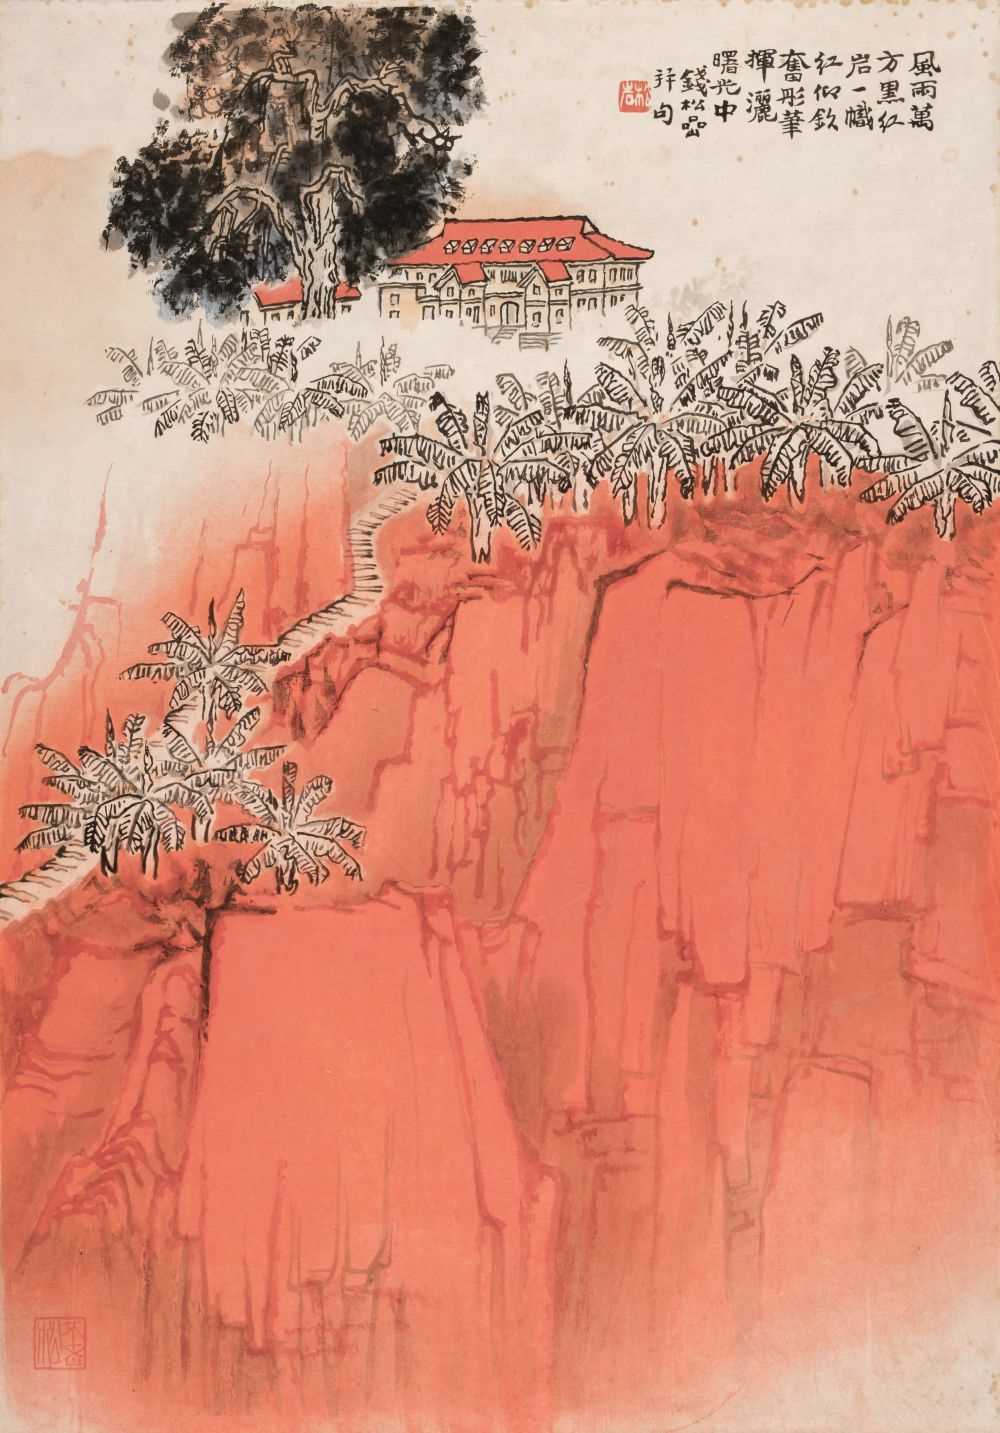 257 - Qian Songyan 錢松岩 (1899-1985). Red Cliff, circa 1975